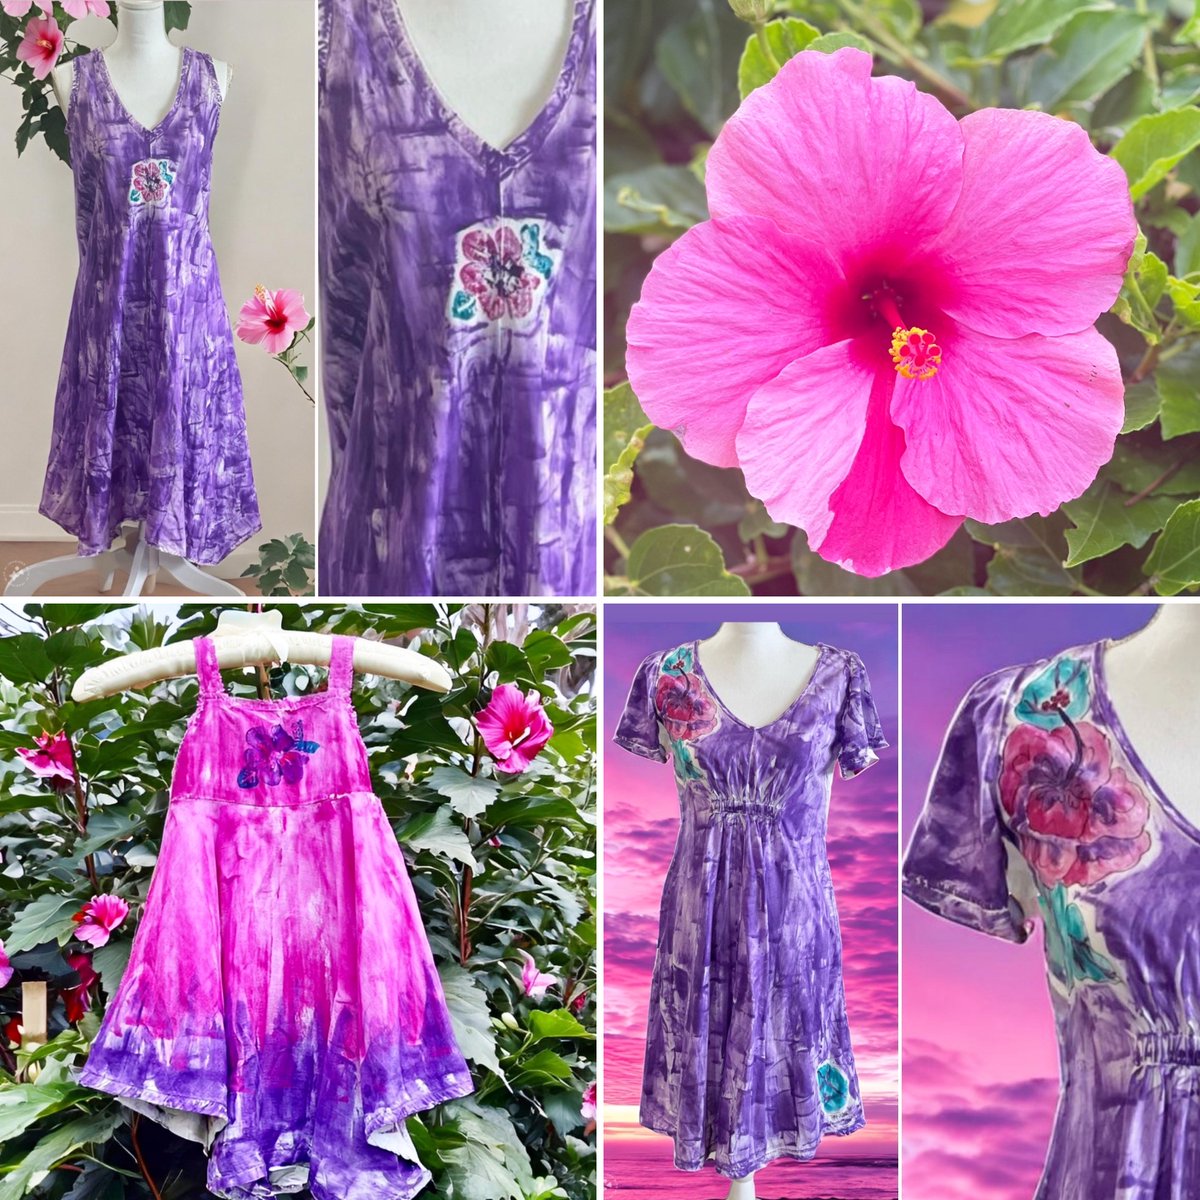 Mothers Day set ready to fly off #fashiontrends #womensfashion #kidsfashion #dress #FlowersOfTwitter #Hawaii #ArtistOnTwitter #TuesdayFeeling #mothersdaygift #etsyshop #textileshop #Fabric PetrinaBlakely.etsy.com